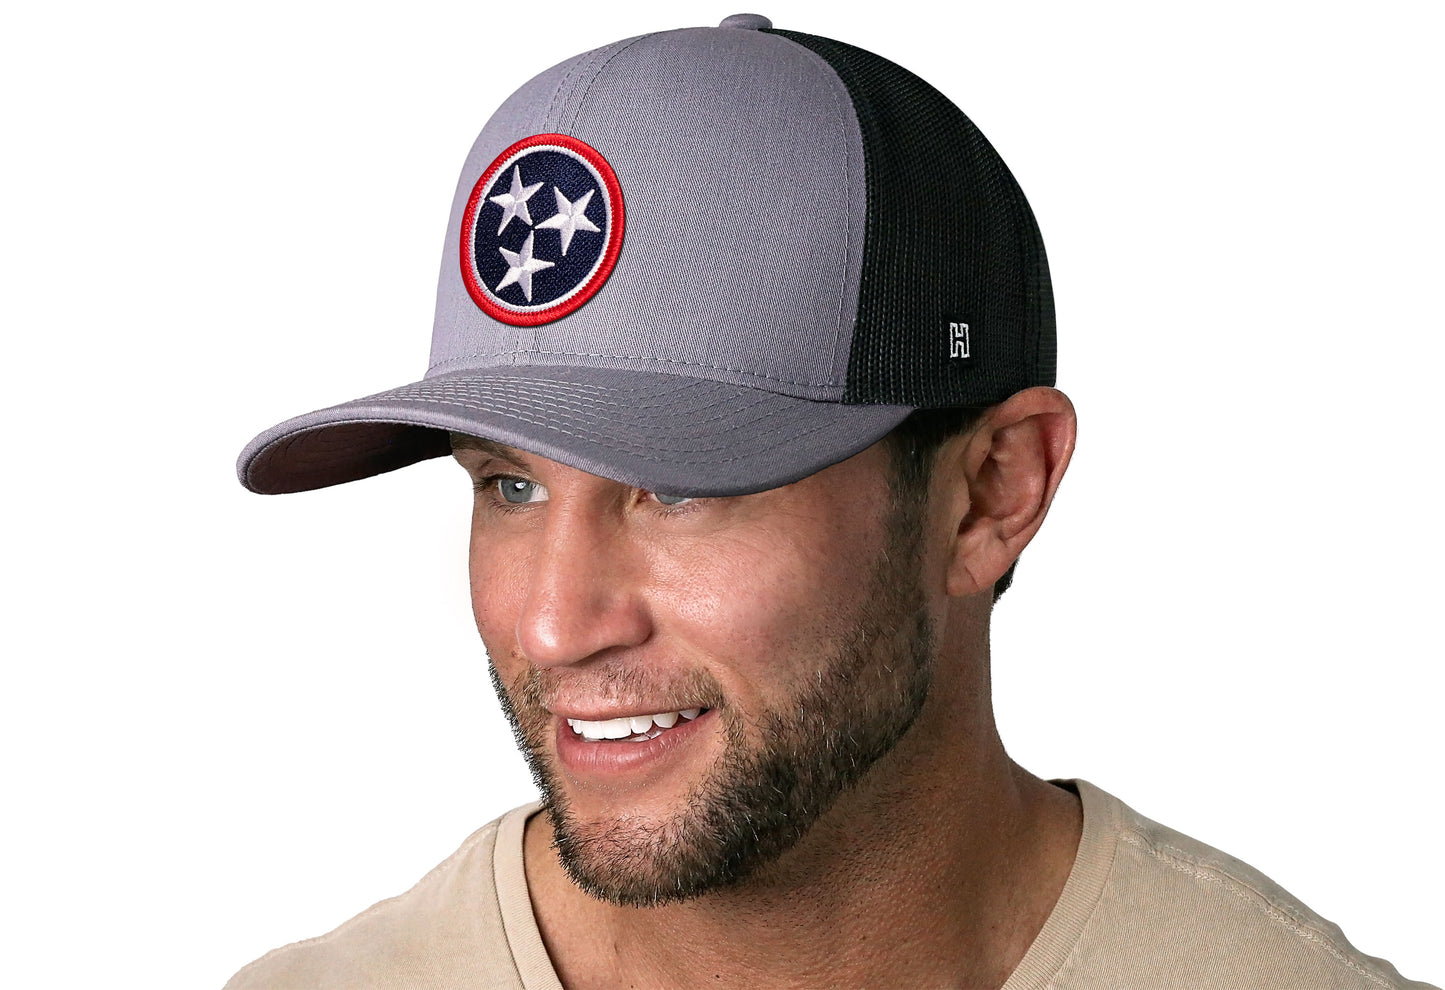 Tennessee Flag Trucker Hat  |  Gray Black TN Snapback